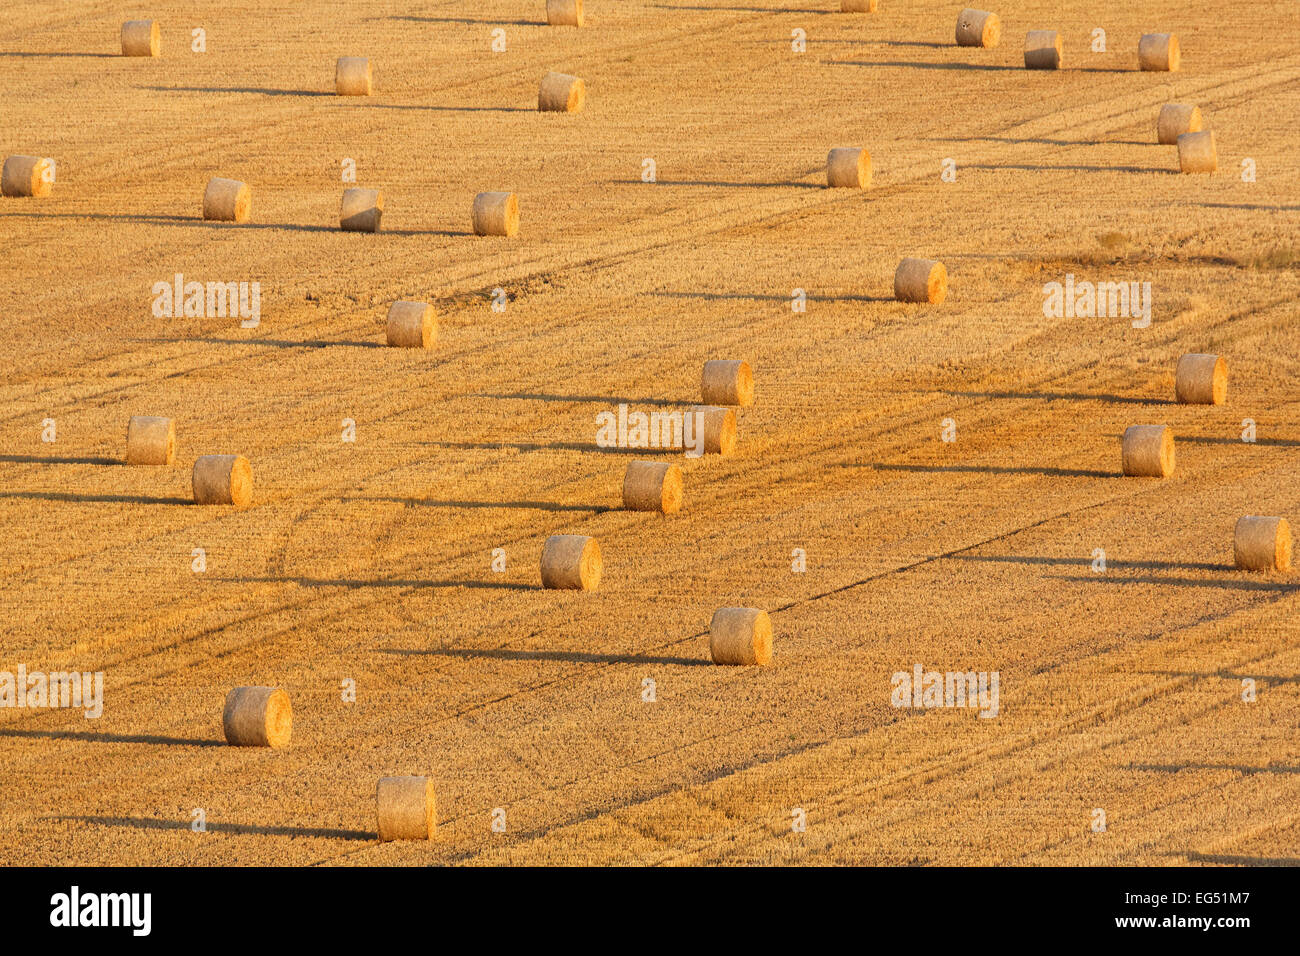 Campo cosechado con fardos de paja redondo Foto de stock